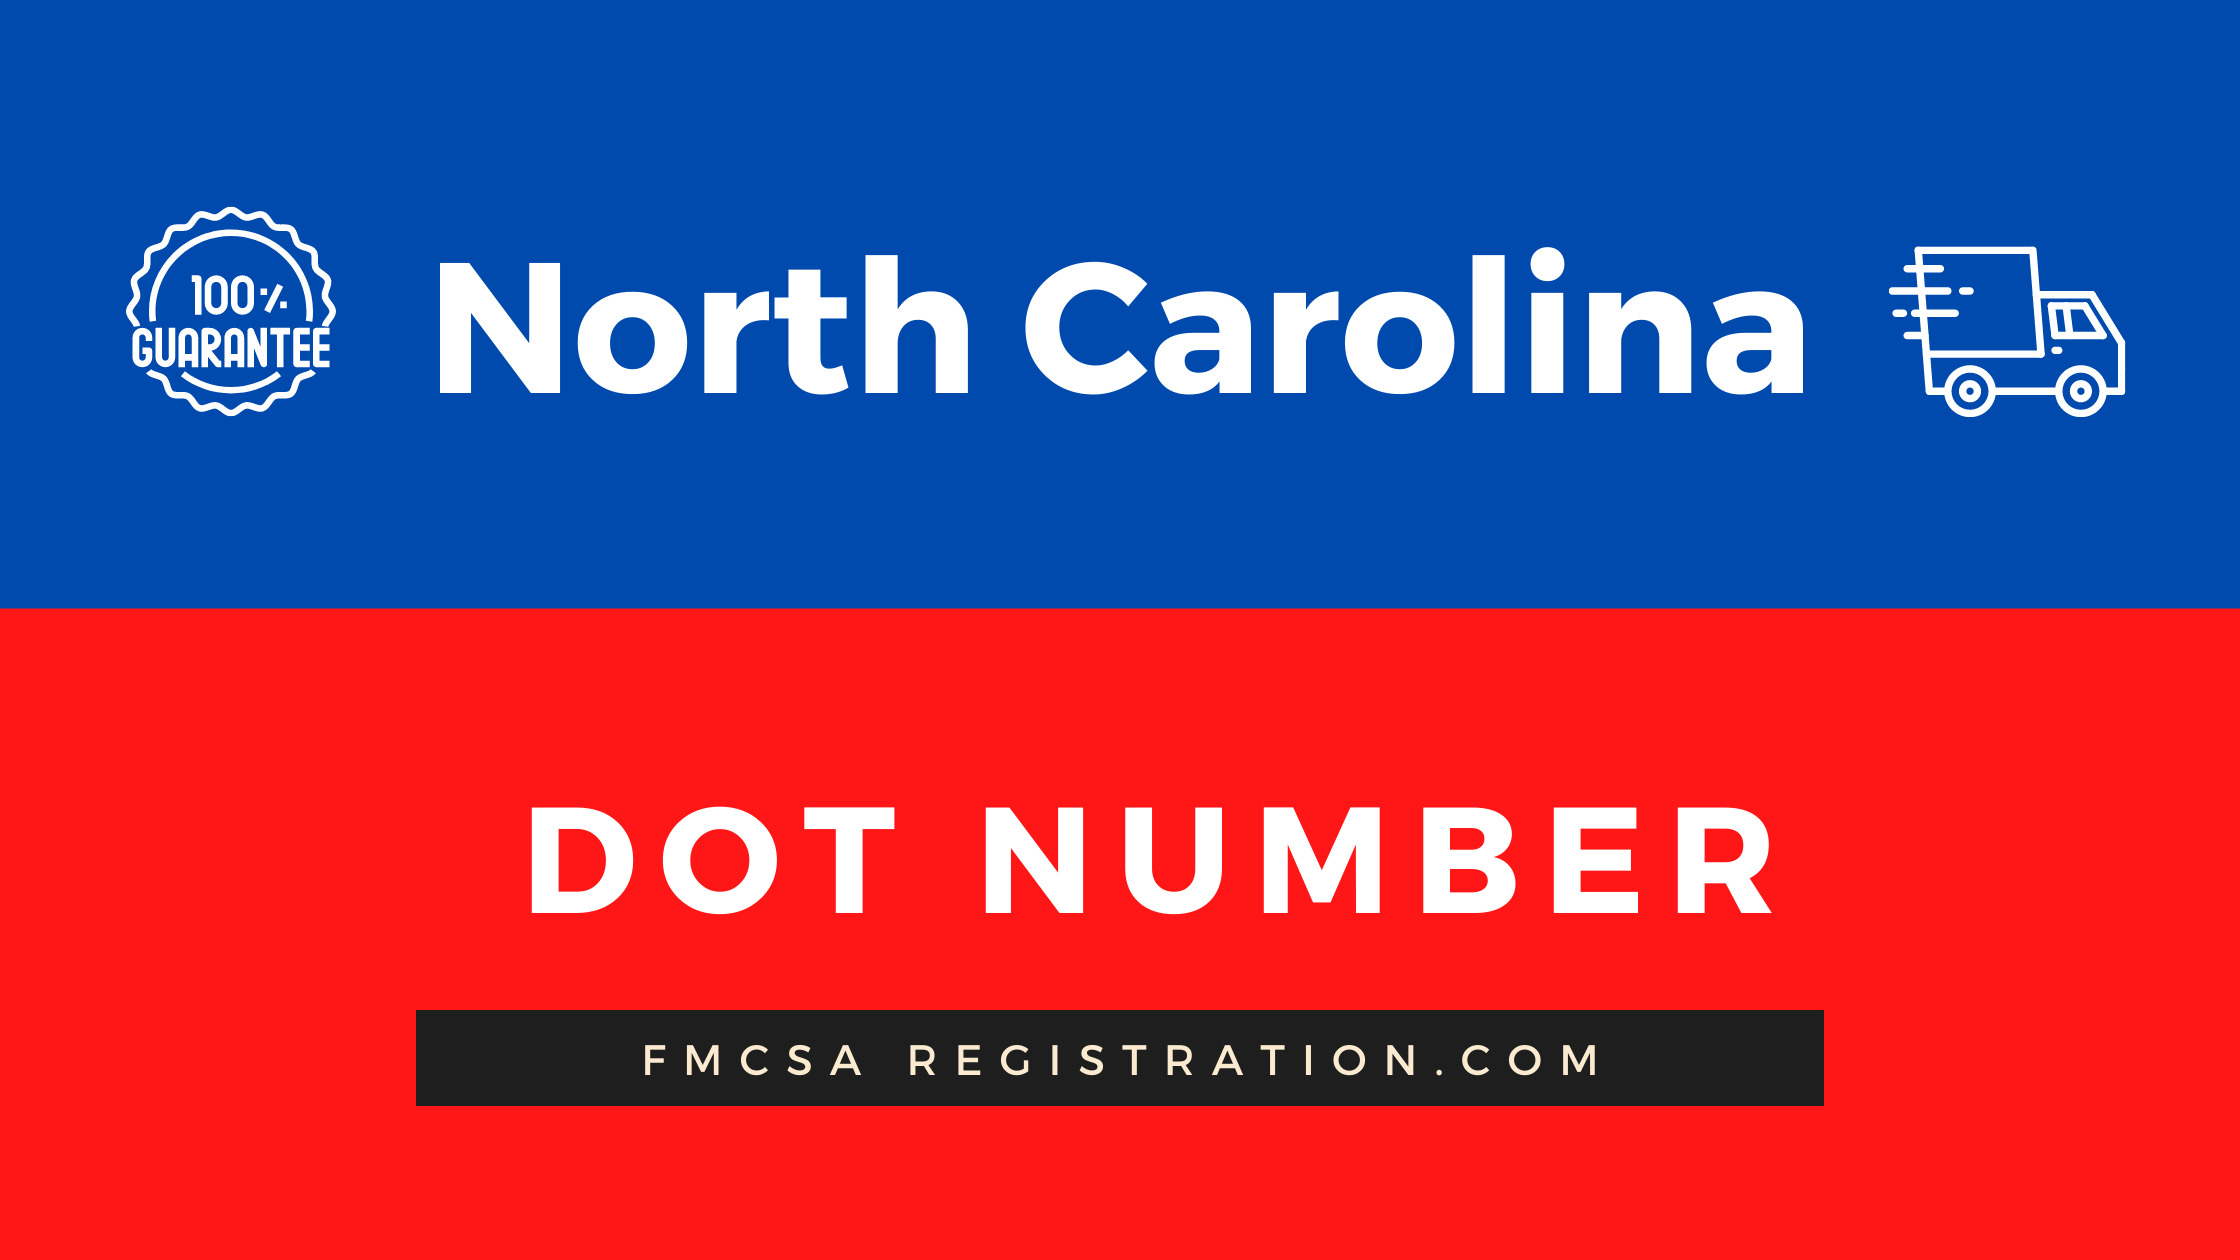 North Carolina DOT Number